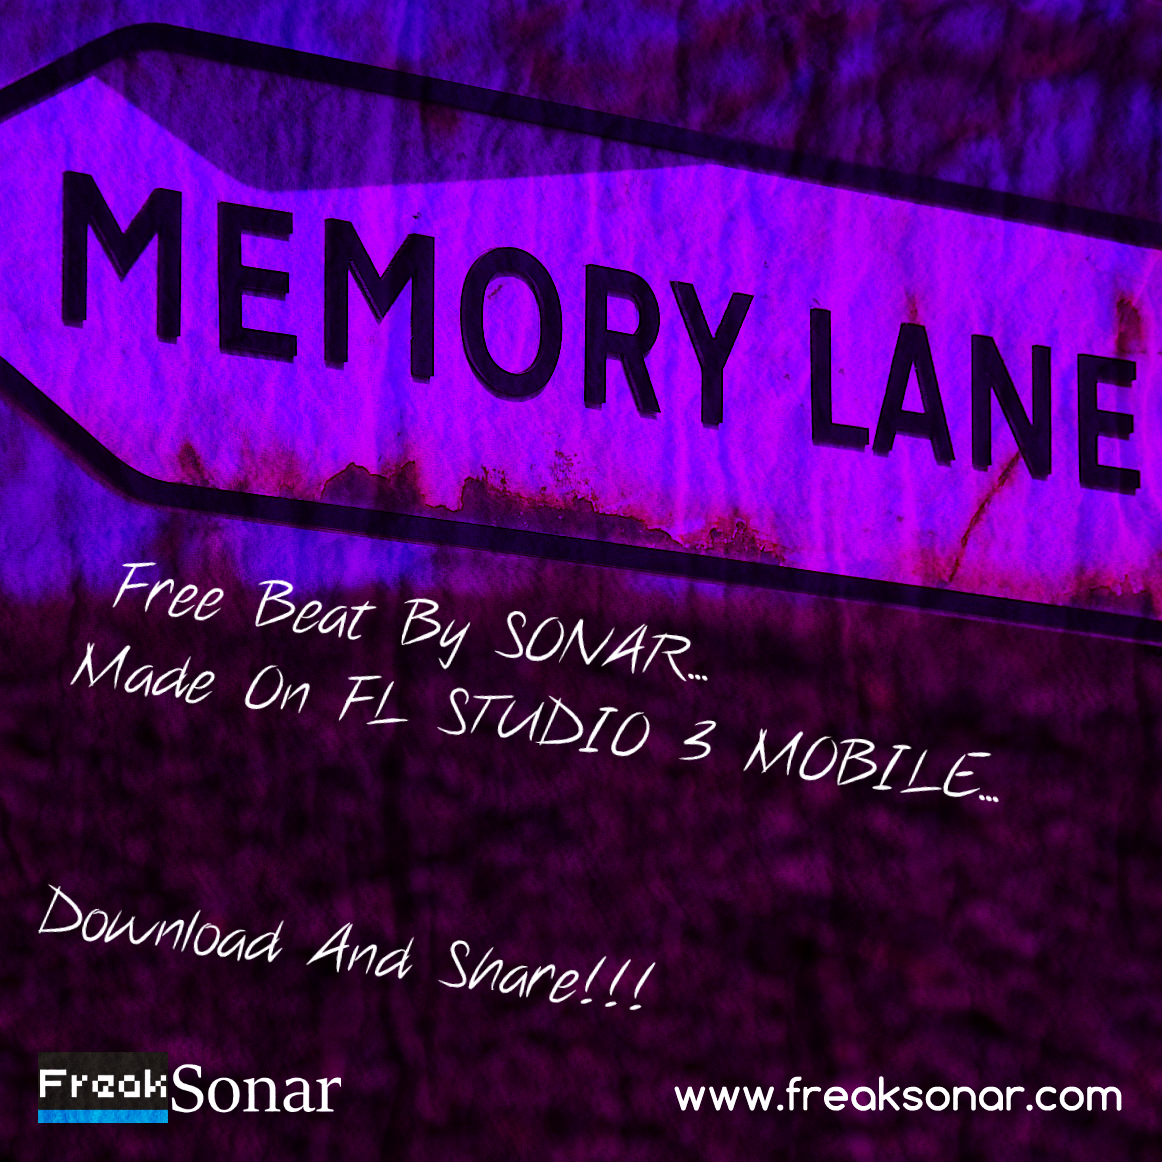 Memory Lane Web - Made With Fl Studio Mobile 3 by SONAR - Memory Lane ( Free Beat )